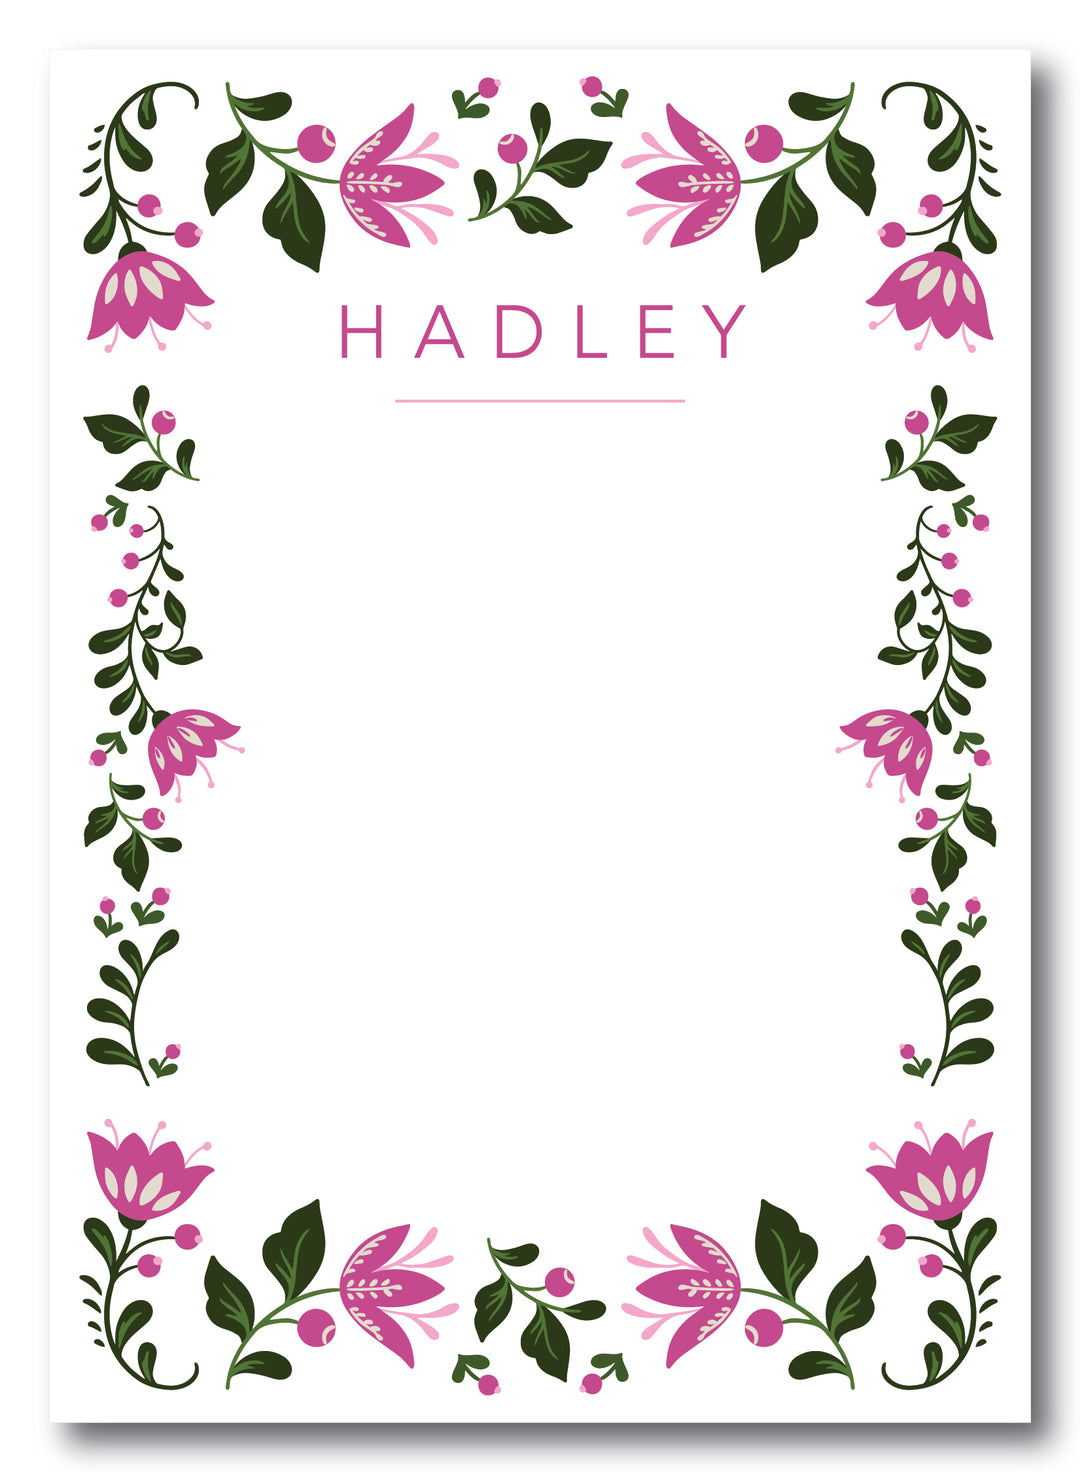 The Hadley Notepad